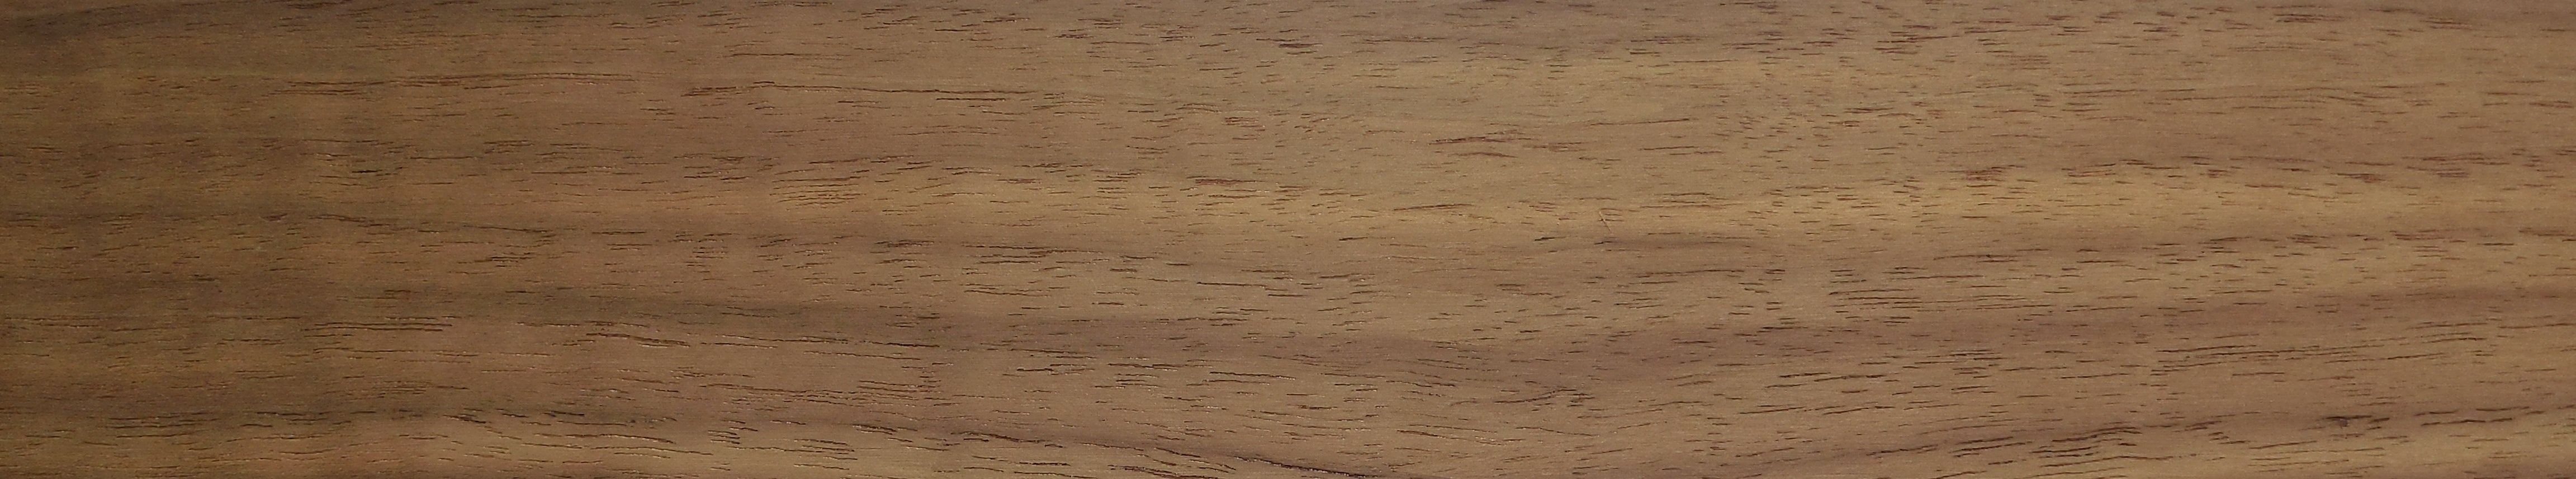 American Black Walnut Thick wood Pre-glued Edging / Lipping 22mm x 1mm x 50 Metres - EDGEBANDER OR IRON ON